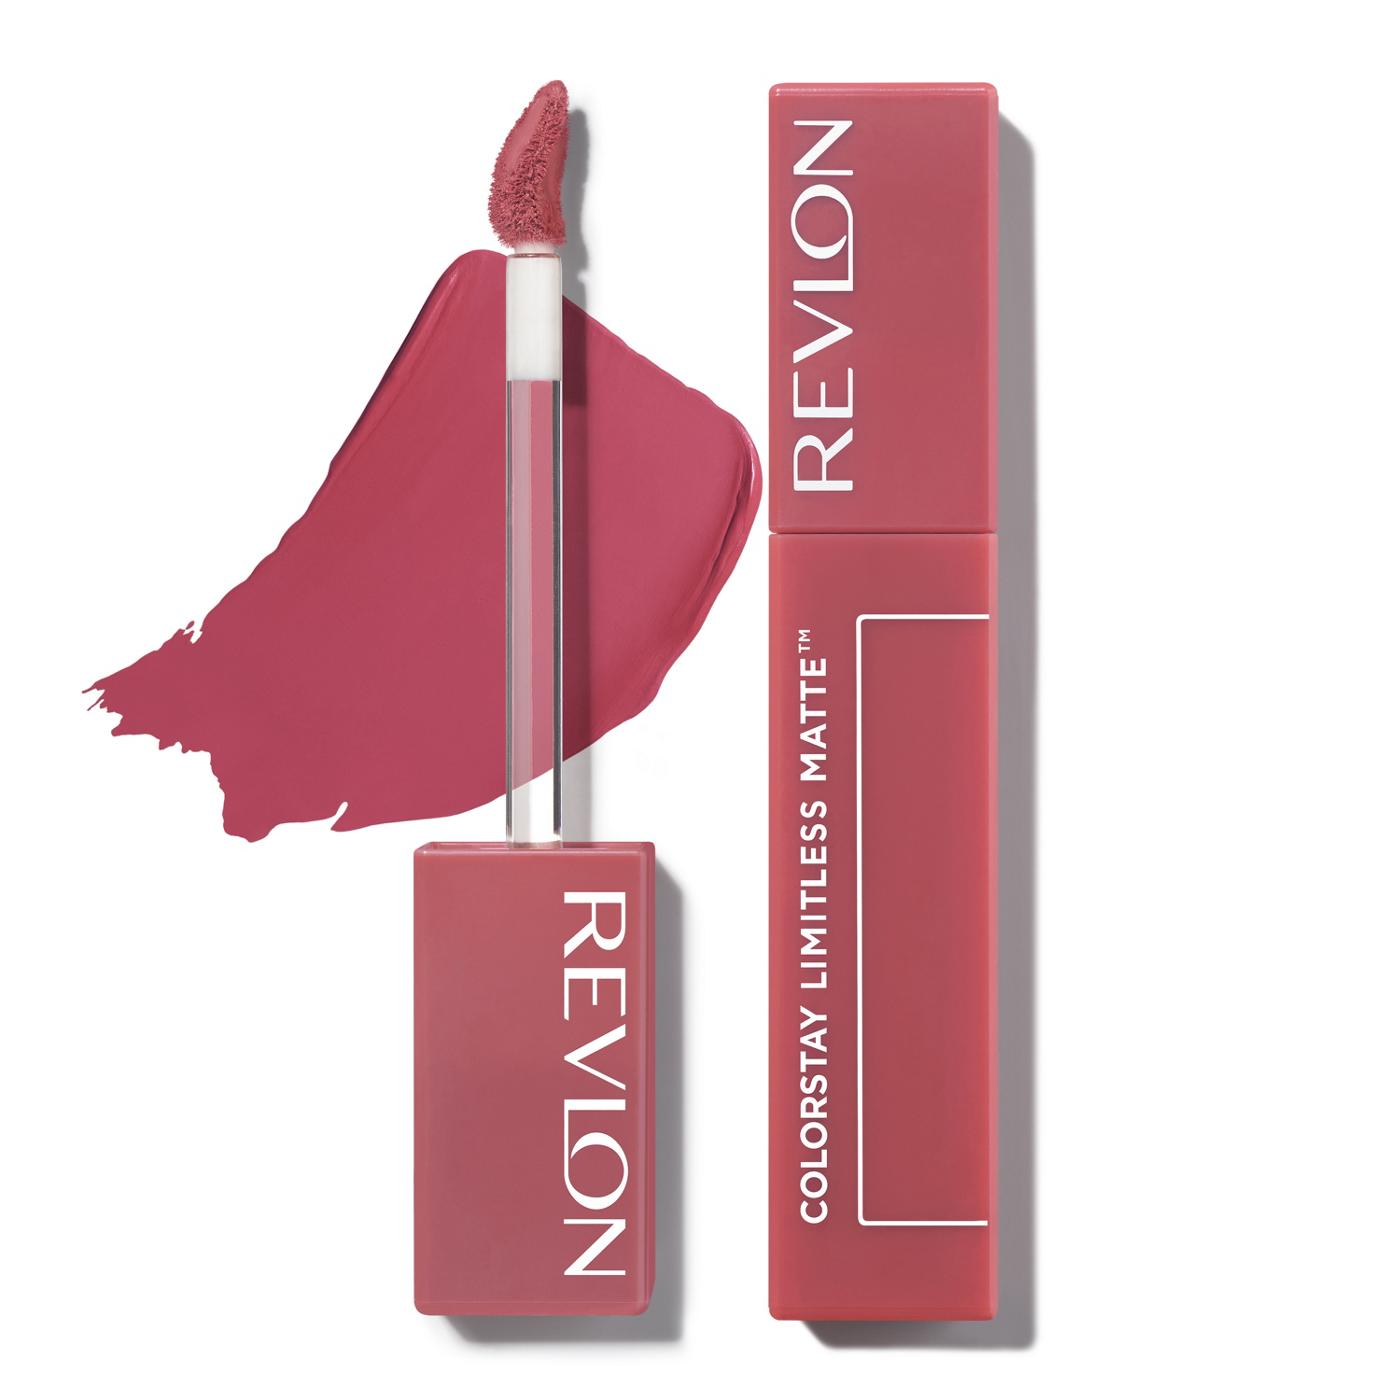 Revlon ColorStay Limitless Matte Liquid Lipstick - Manifest; image 1 of 6